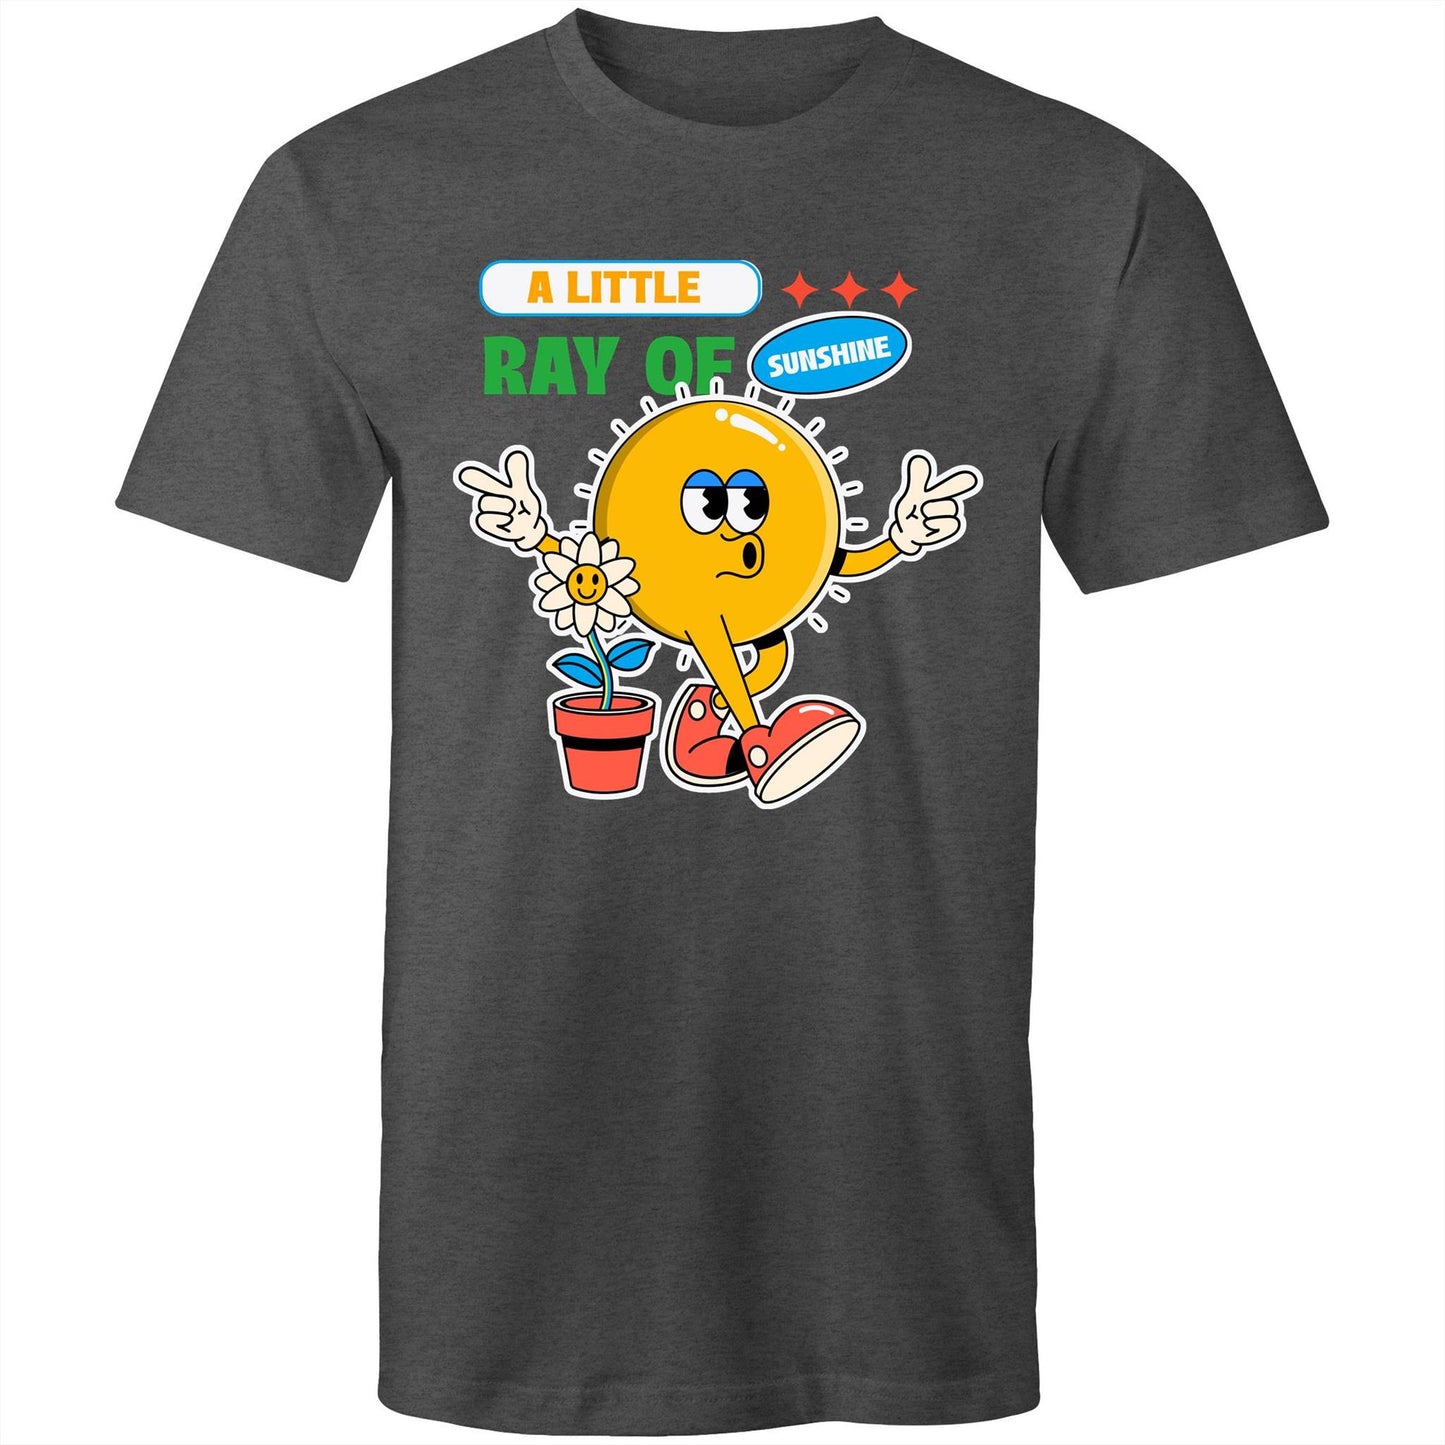 A Little Ray Of Sunshine - Mens T-Shirt Asphalt Marle Mens T-shirt Retro Summer